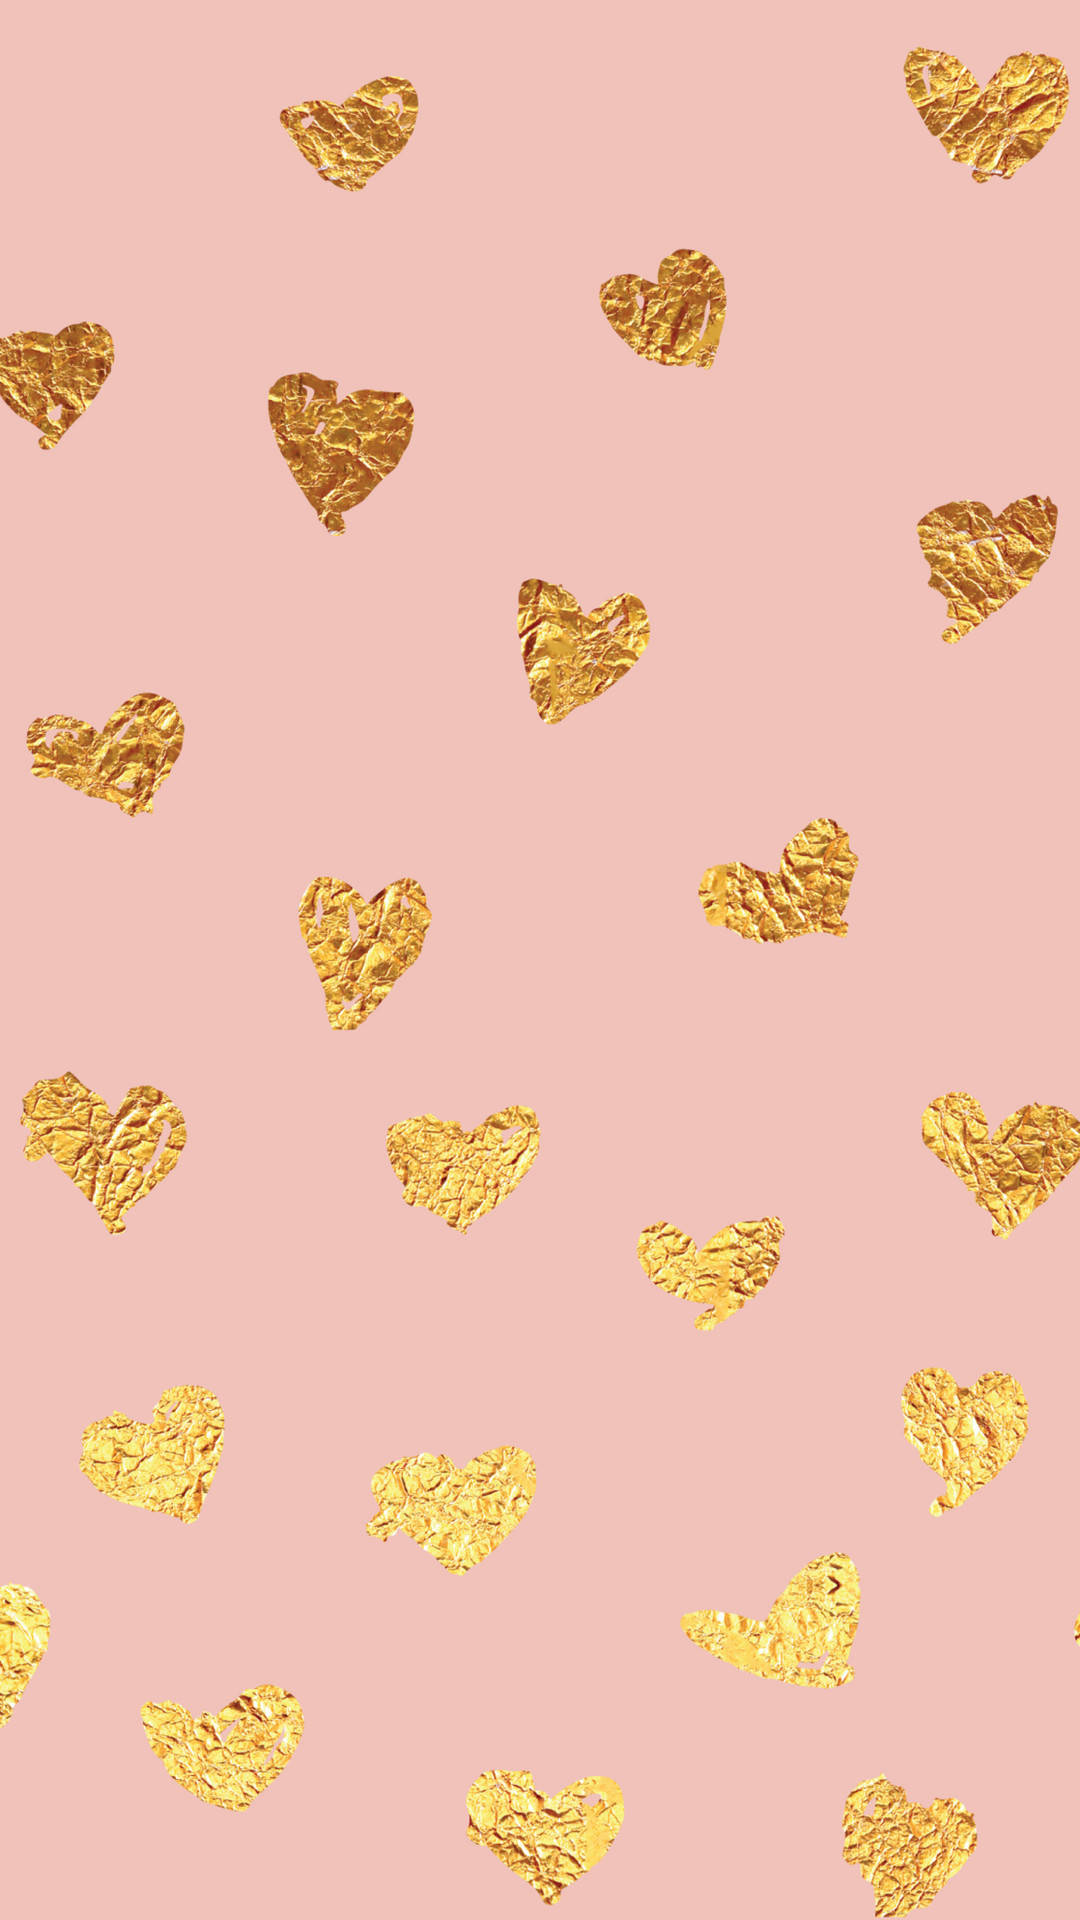 Gold Foil Heart Shapes Background